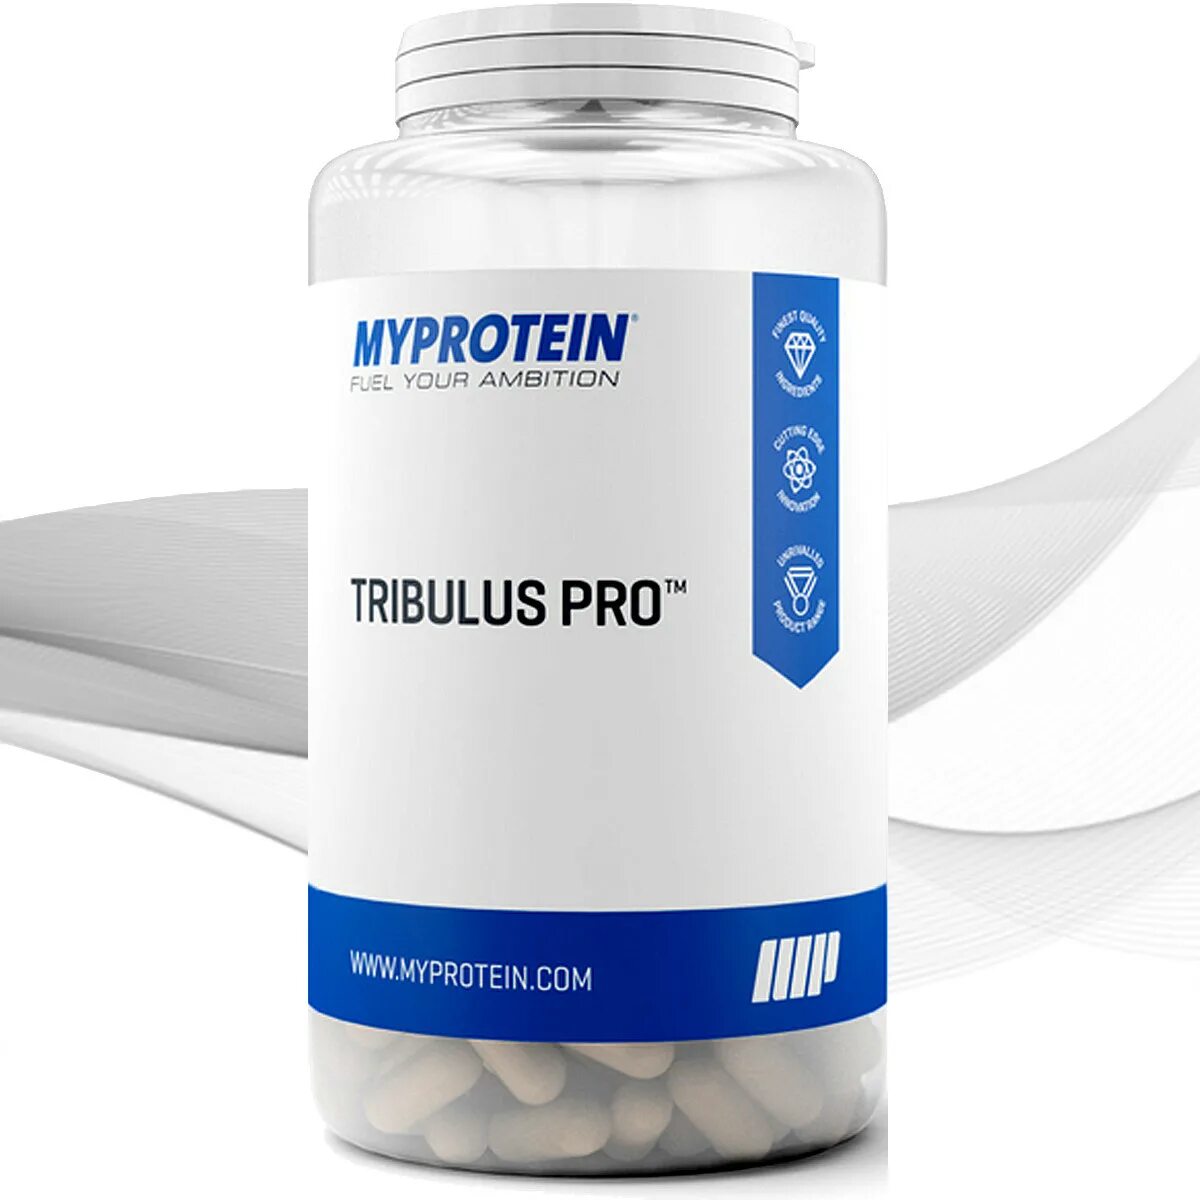 Бустер тестостерона это. Трибулус бустер тестостерона. Myprotein трибулус 90 капсул. Трибулус 300 мг, Myprotein Tribulus Pro. Лучший бустер тестостерона для мужчин.